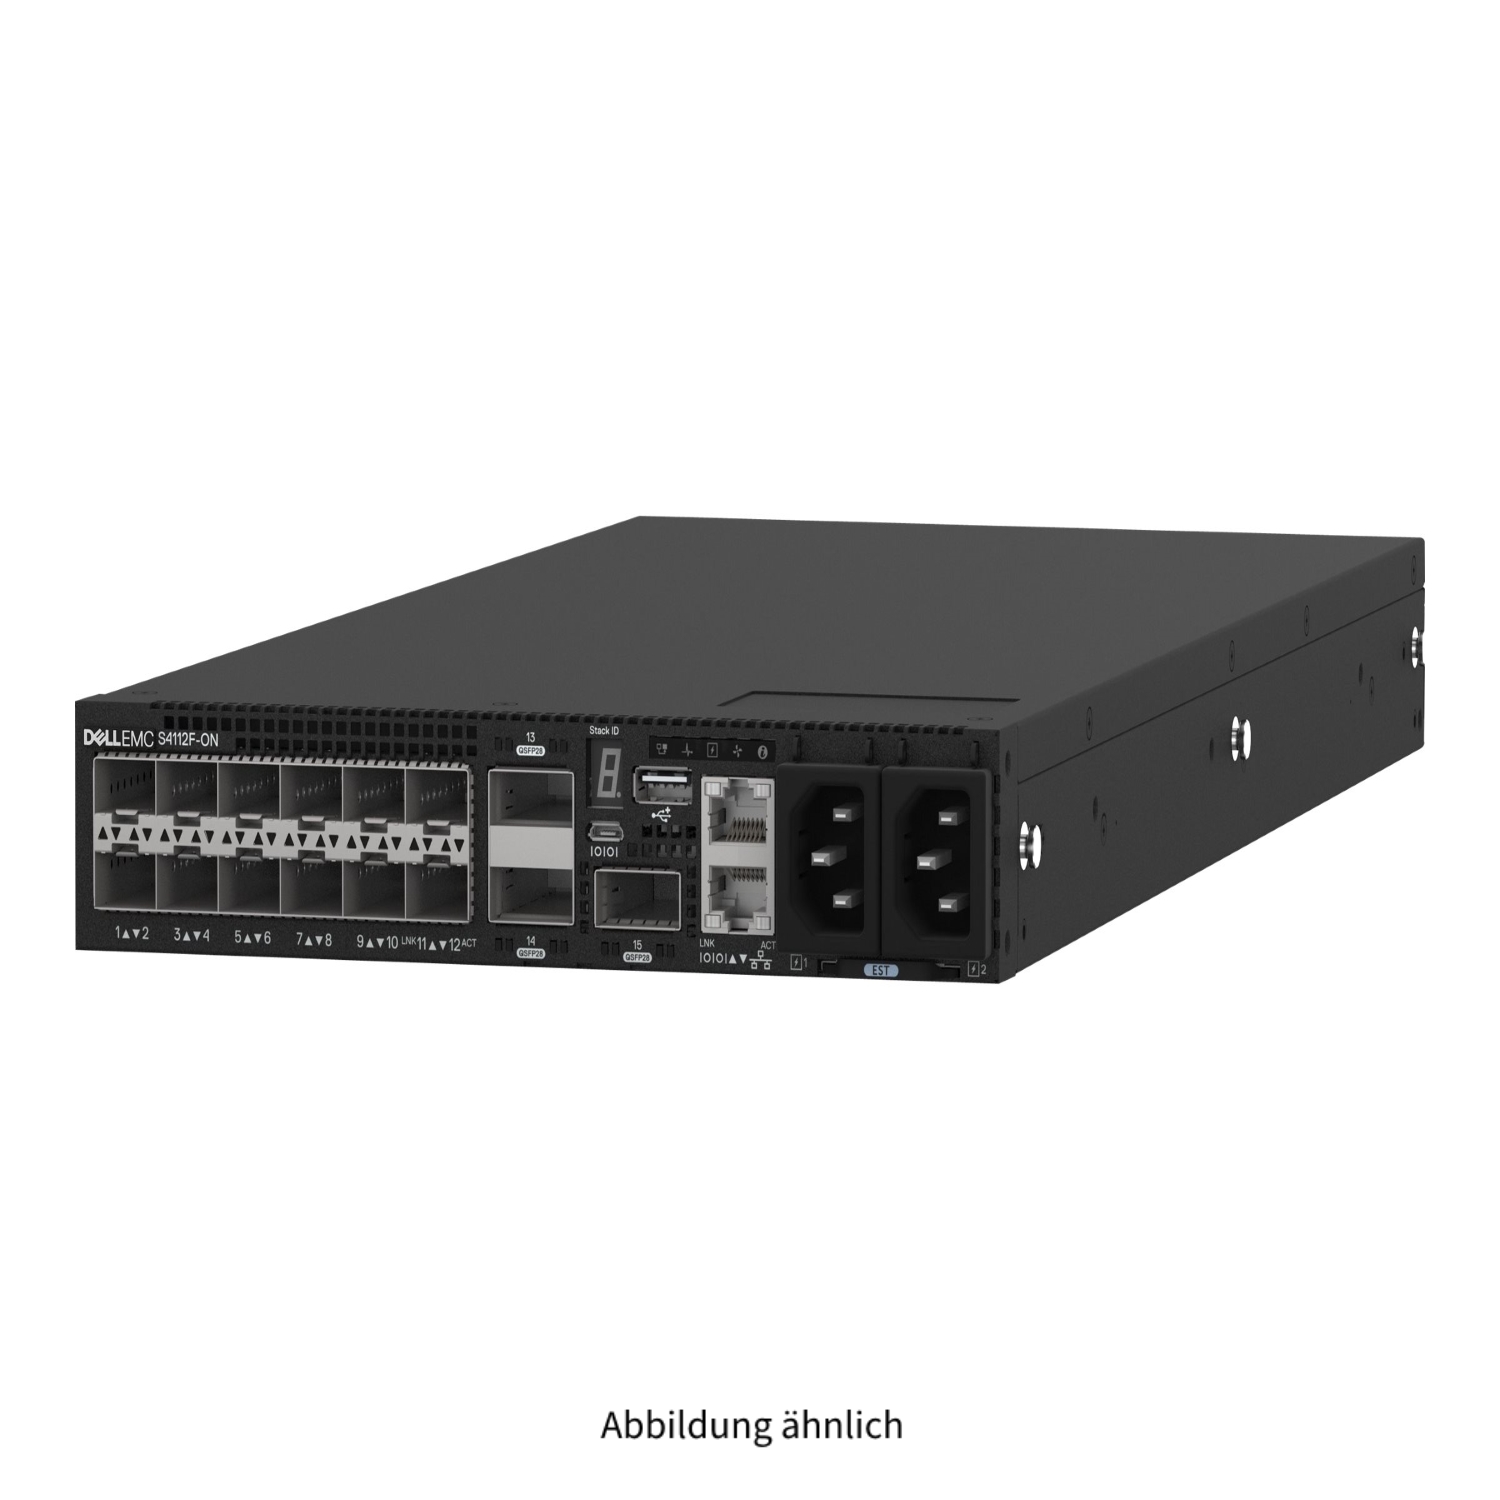 DELL PowerSwitch S4112F-ON 12x SFP+ 10GbE 3x QSFP28 100GbE Managed Switch ProSupport Gültig bis MÄRZ 2025 210-AOYR 